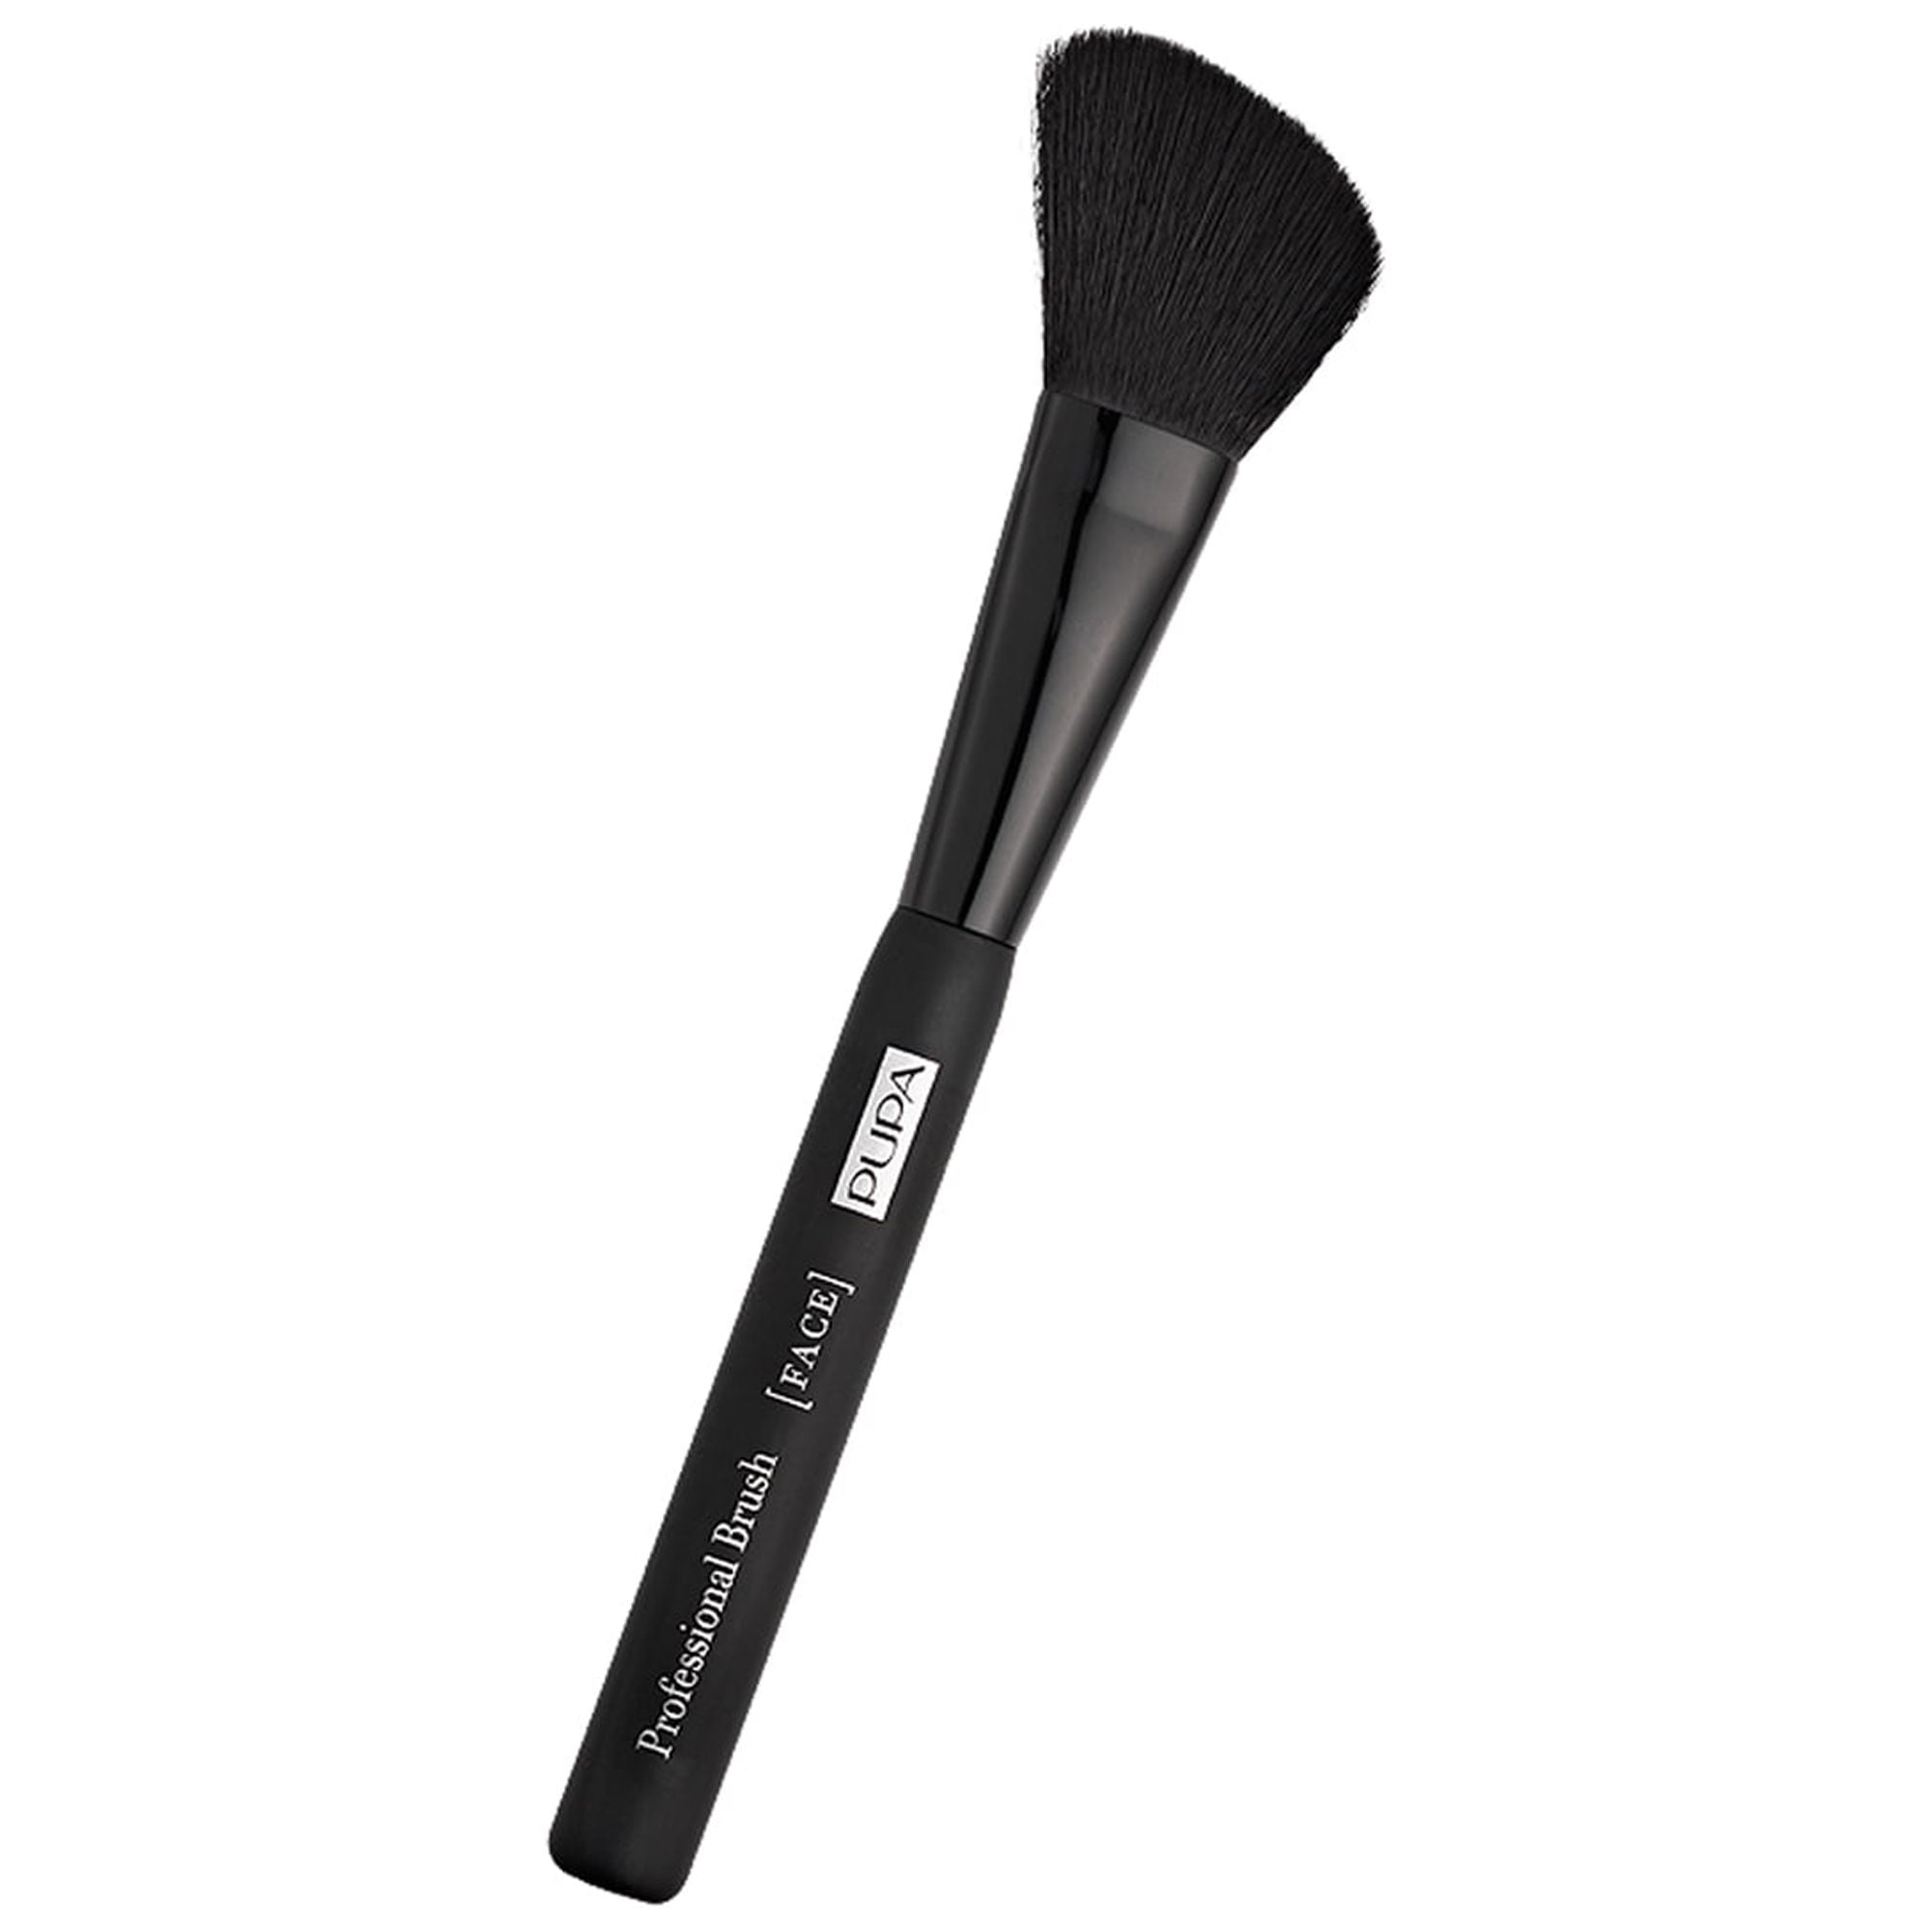 Pur, Makeup, Pr Pro Tools 5piece Brush Wbrush Roll